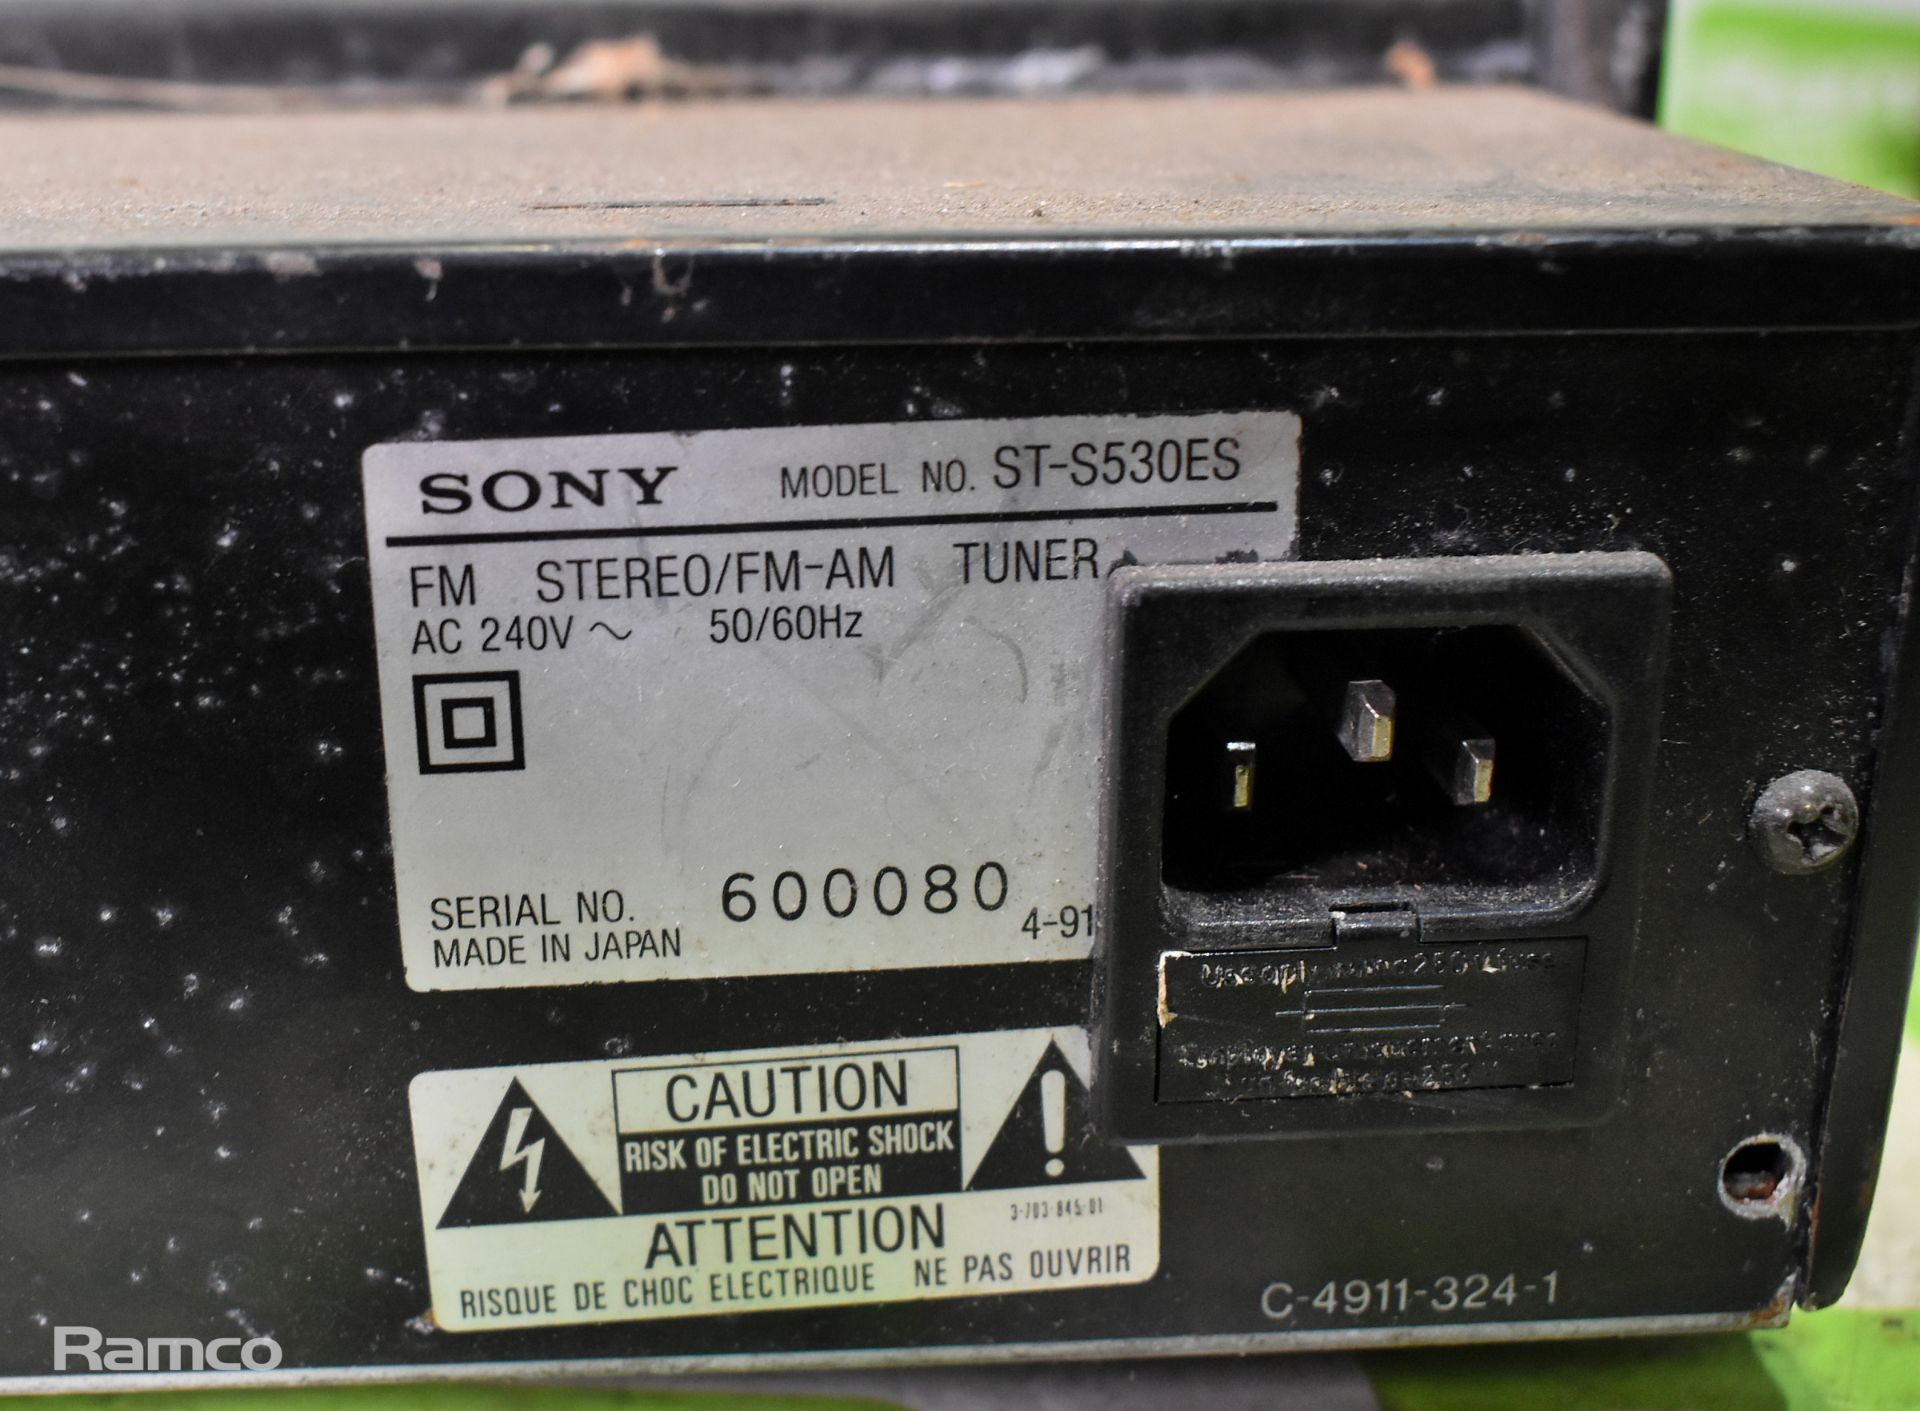 Kenwood DMF-3020 minidisc player, 230V 50Hz - L 490 x W 390 x H 90mm, Sony 530 AM/FM stereo tuner - Image 9 of 14